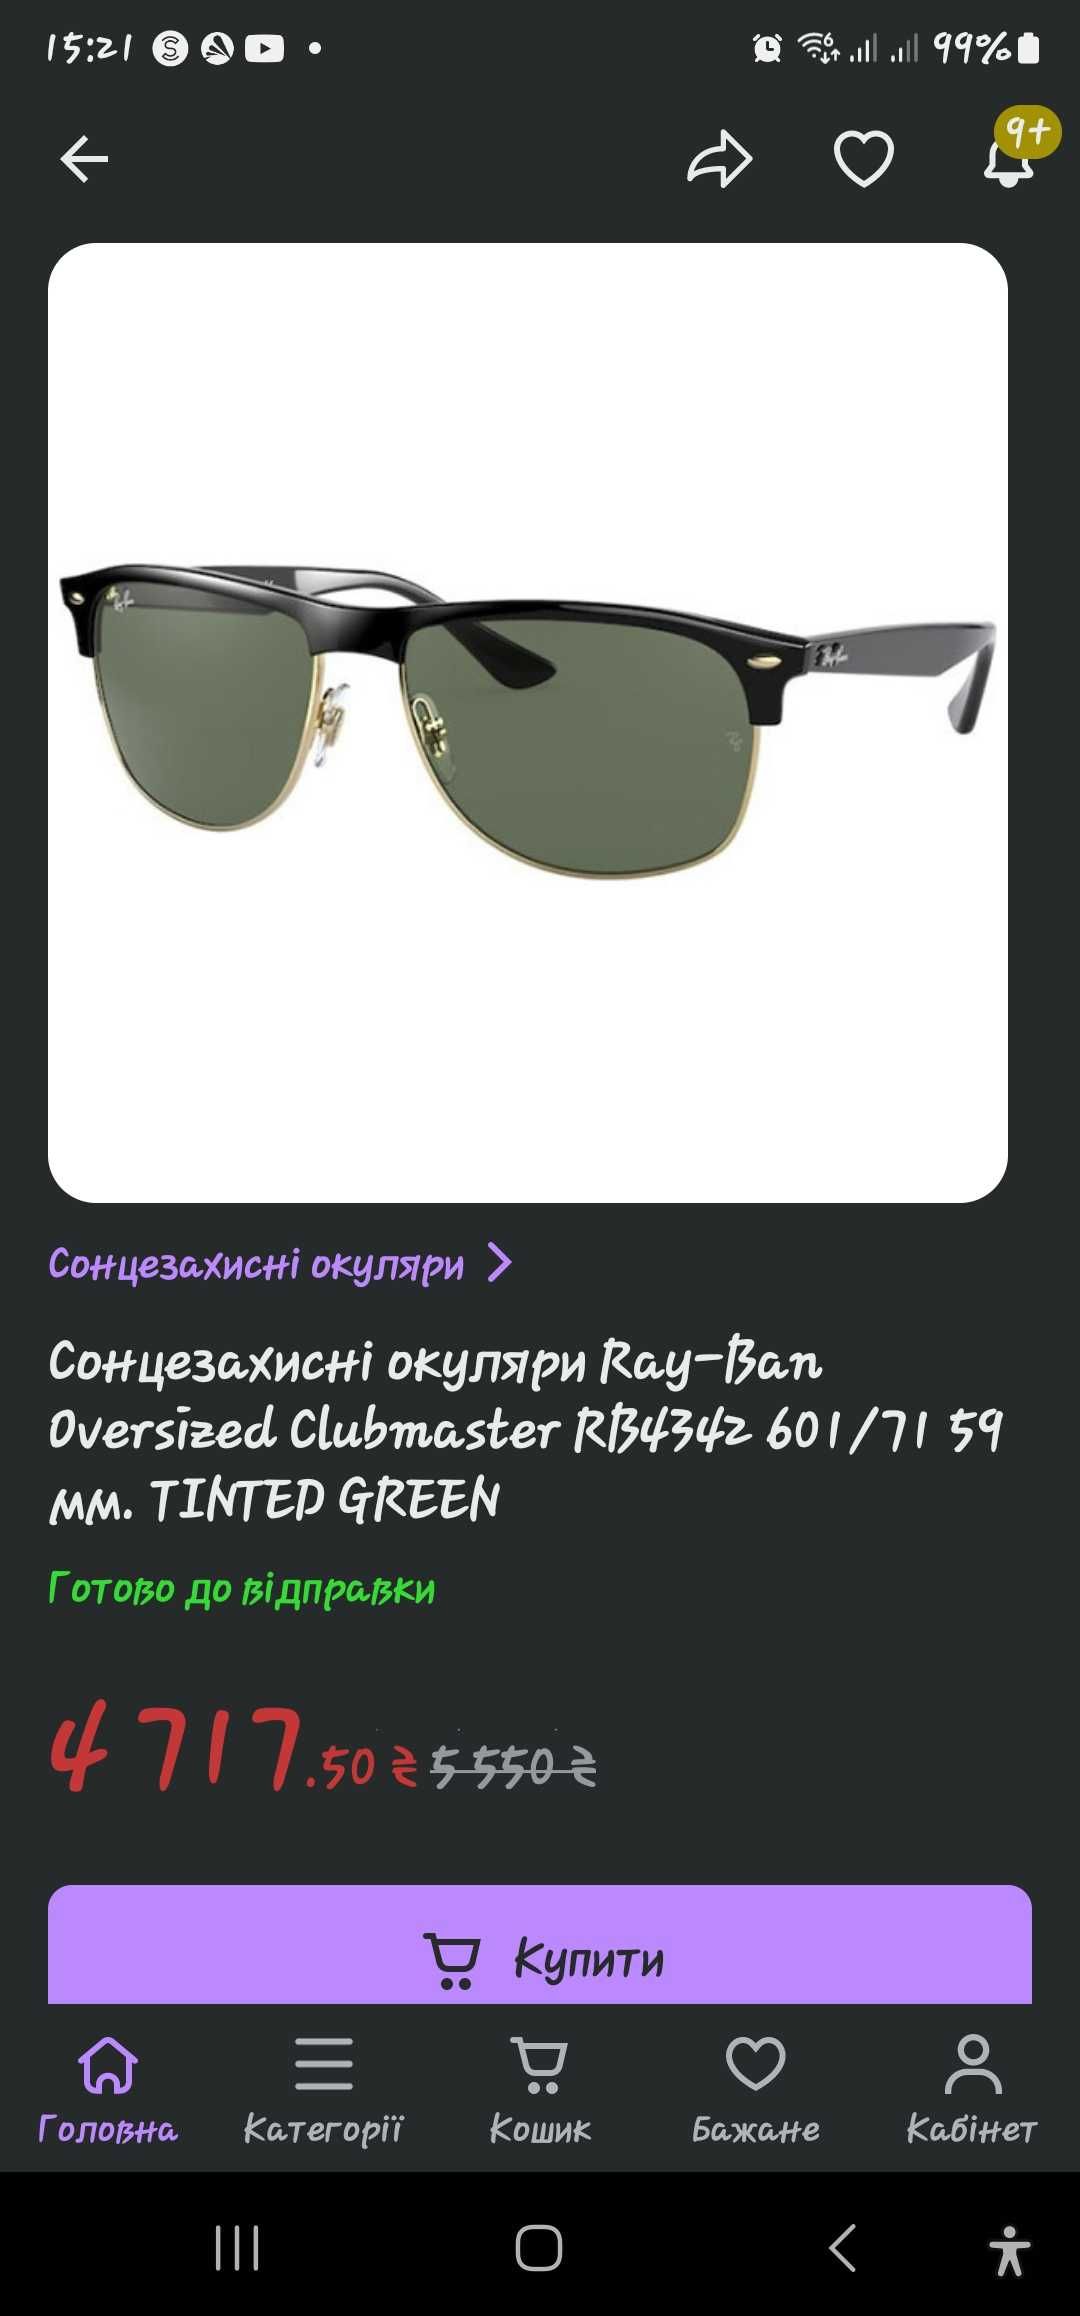 Сонцезахисні окуляри Ray-Ban Oversized Clubmaster RB4342